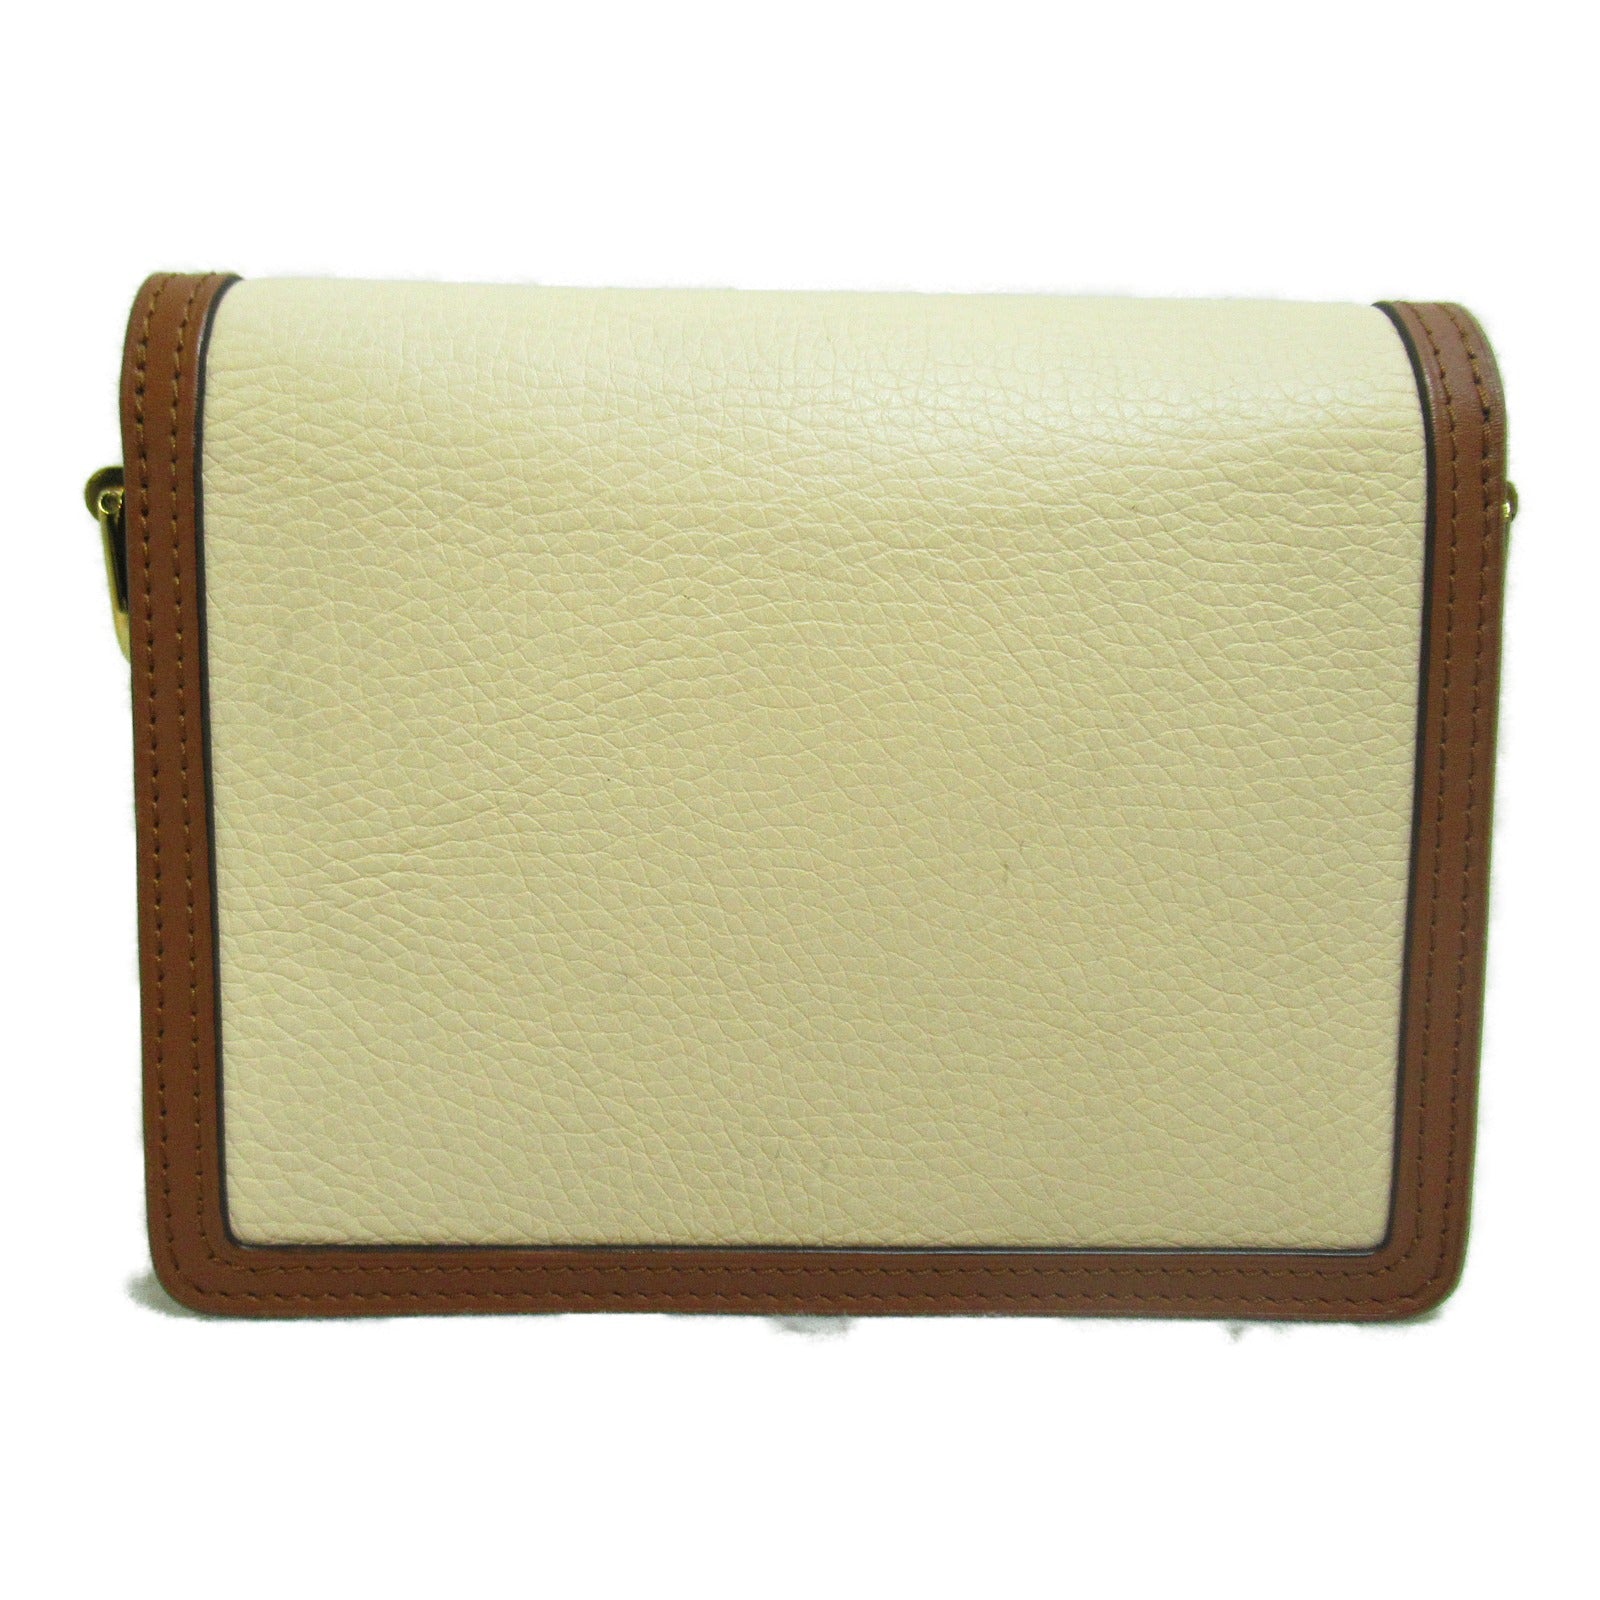 Louis Vuitton Louis Vuitton Dolphin Mini Shoulder Bag Leather  Leather  Brown Cream/Cake M44580